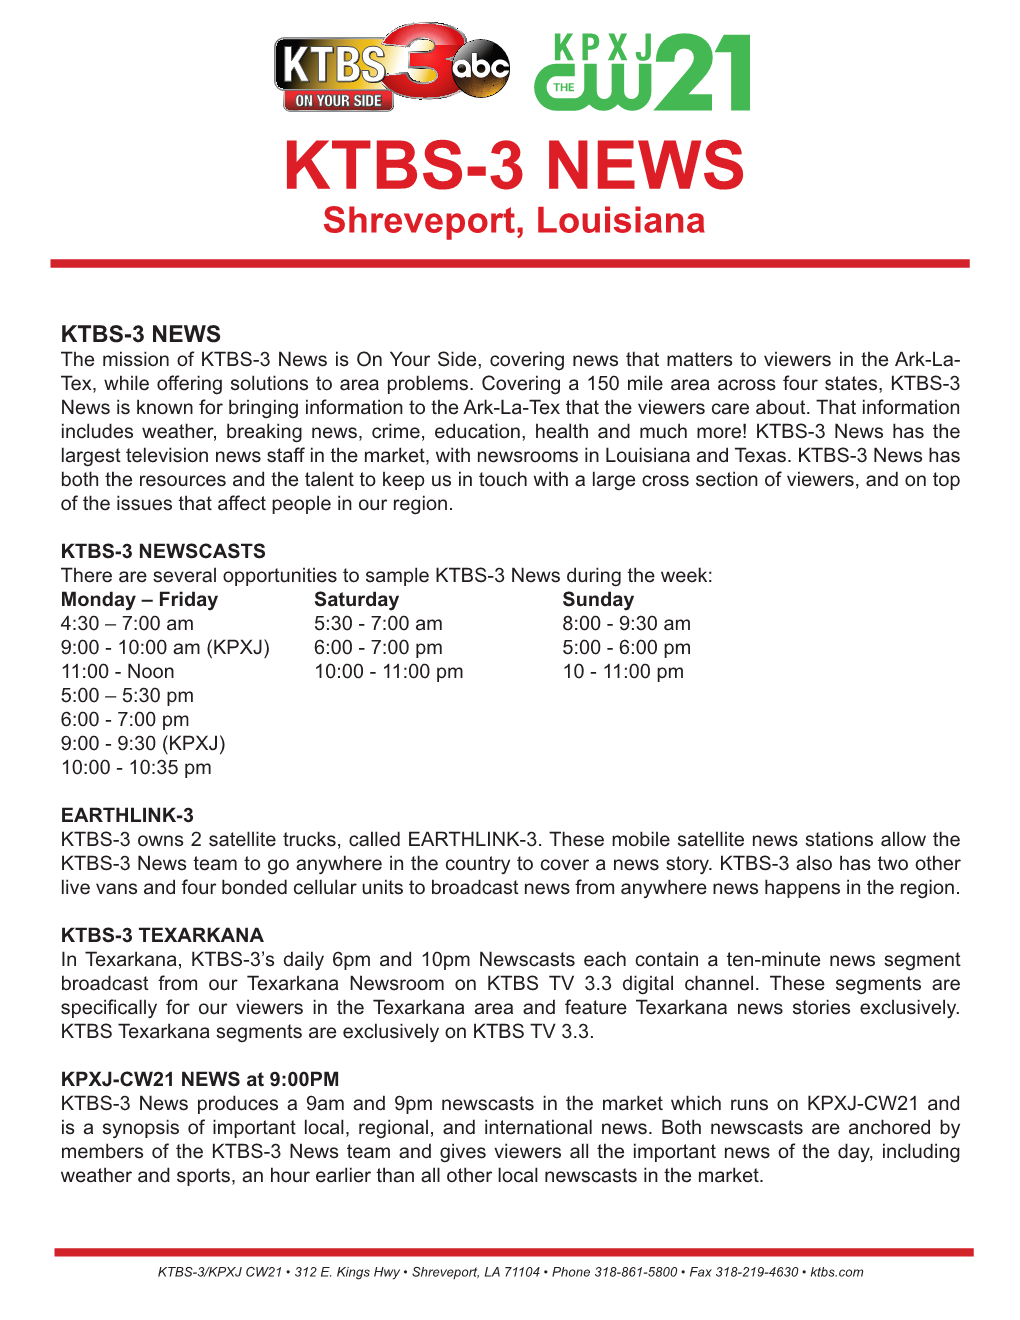 KTBS-3 News Information